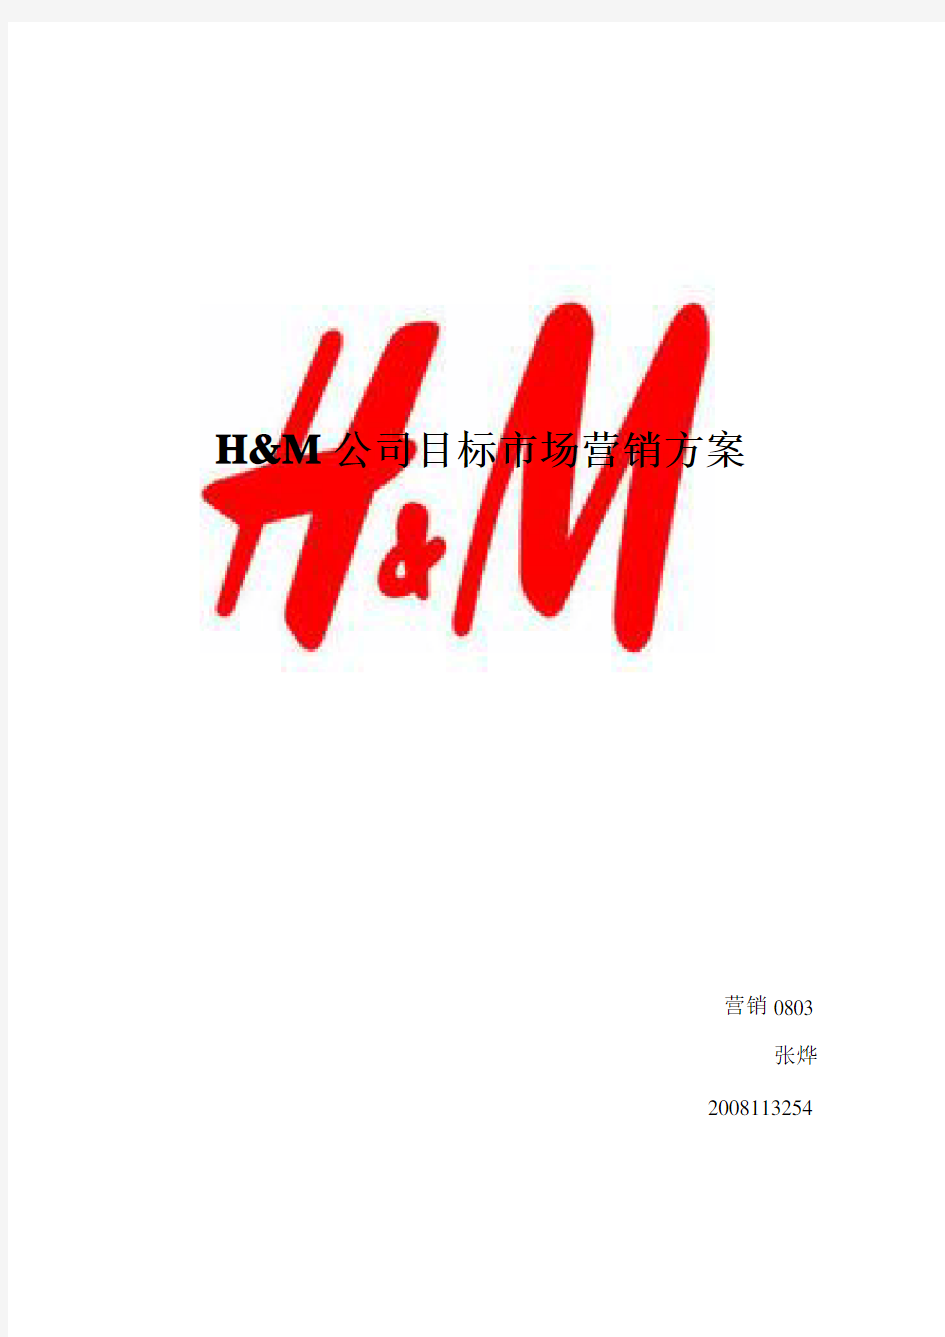 H&M目标市场营销方案